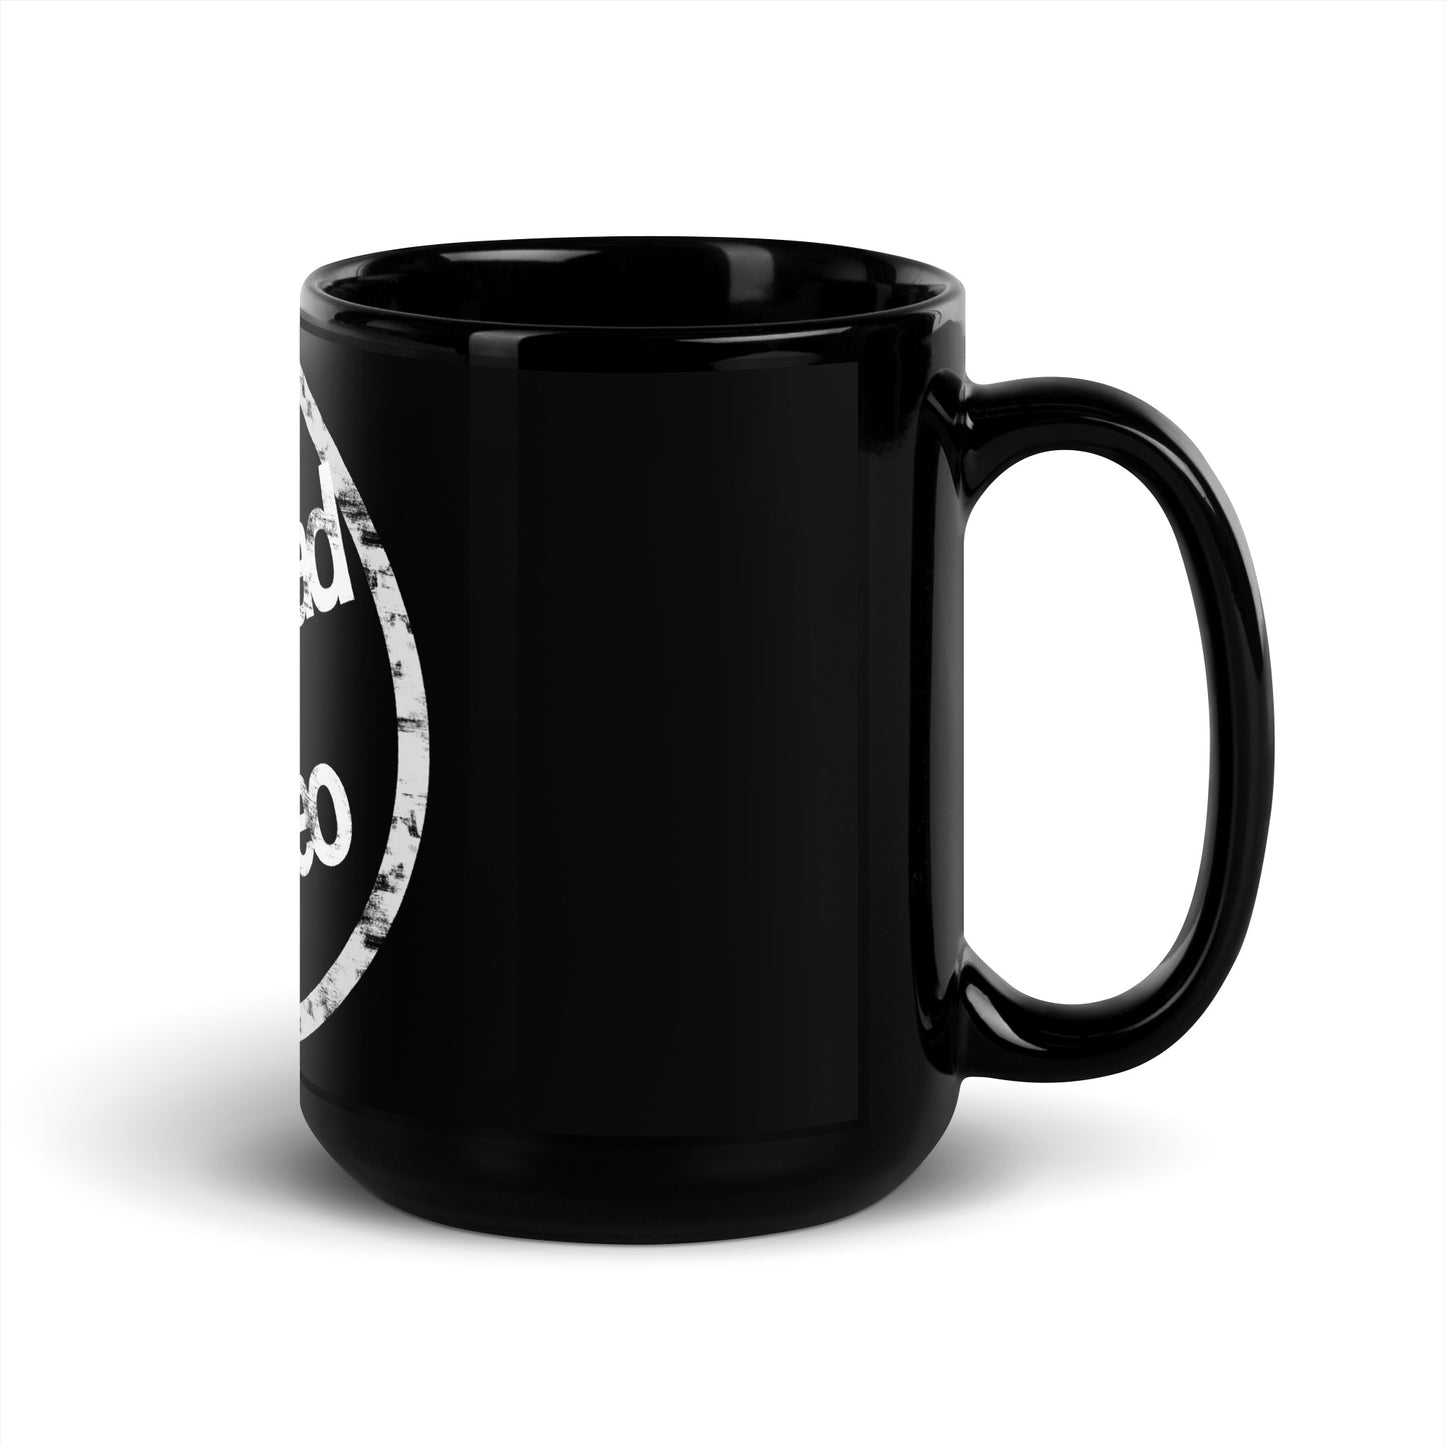 Black Overload in Stereo Logo Mug